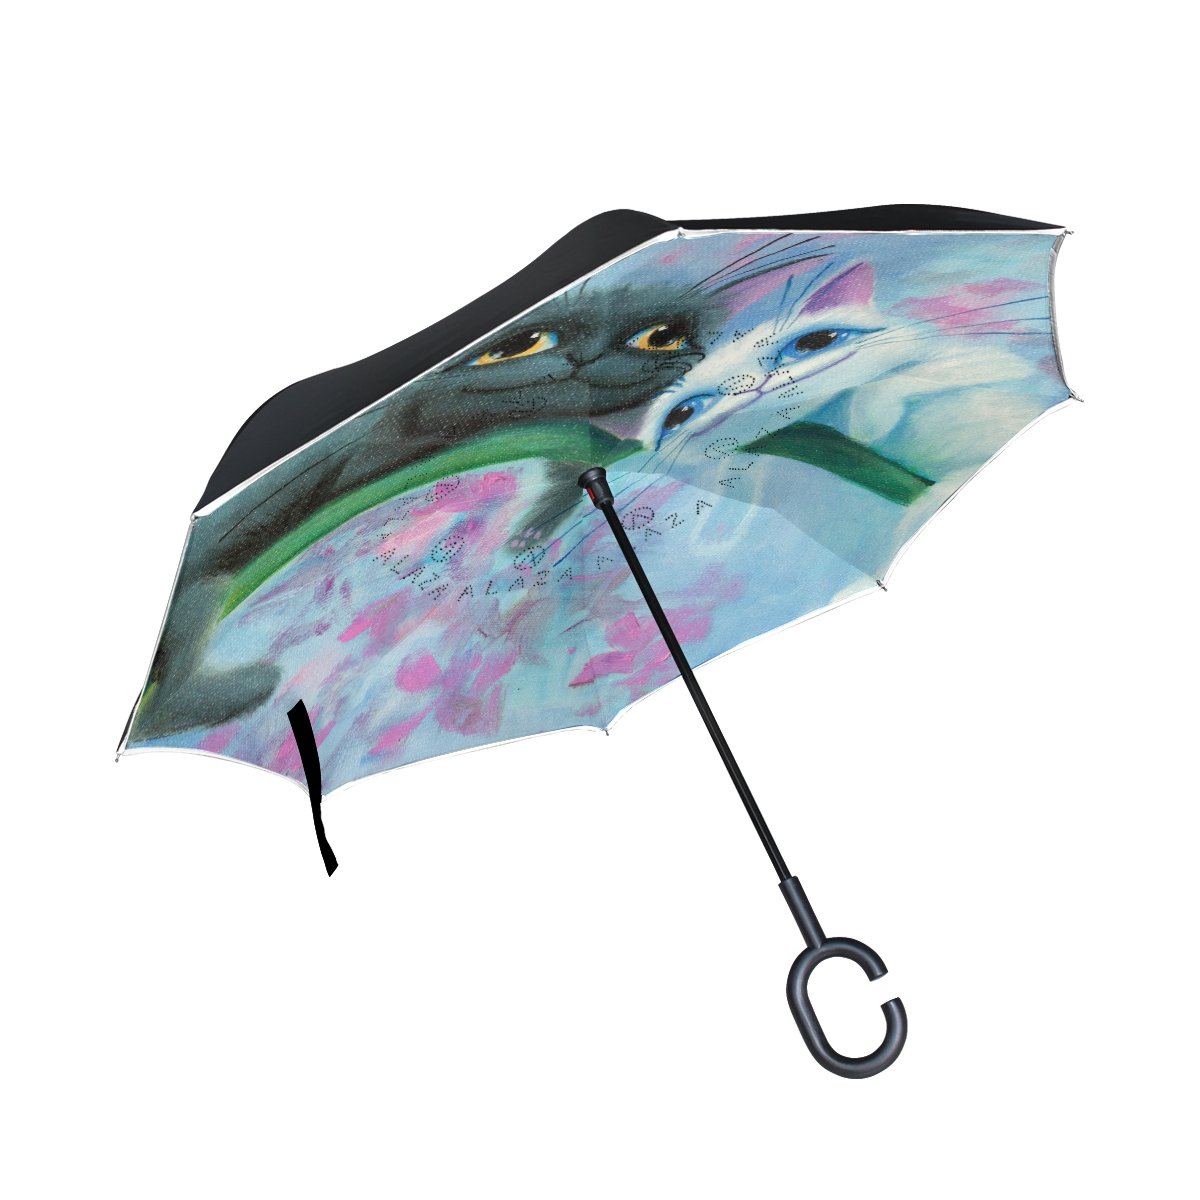 ISAOA Gro?e Schirm Regenschirm Winddicht Doppelschichtige seitenverkehrt Faltbarer Regenschirm f¨¹r Auto Regen Au?eneinsatz,C-f?rmigem Henkel Regenschirm schwarz Katze und wei? Regenschirm